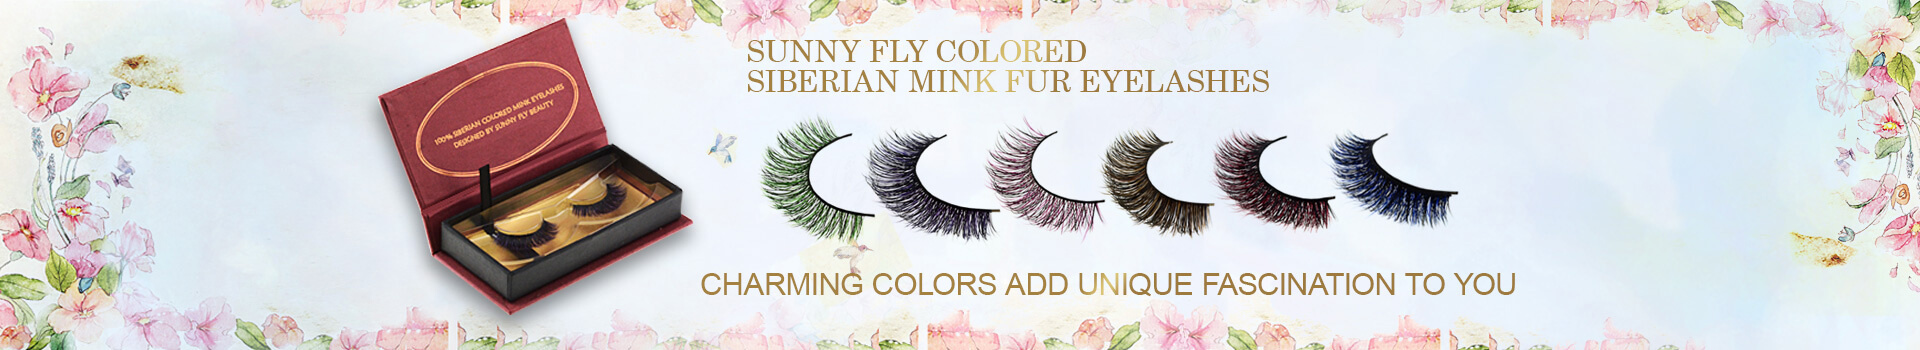 Farget Siberian Mink Fur Eyelashes MC59